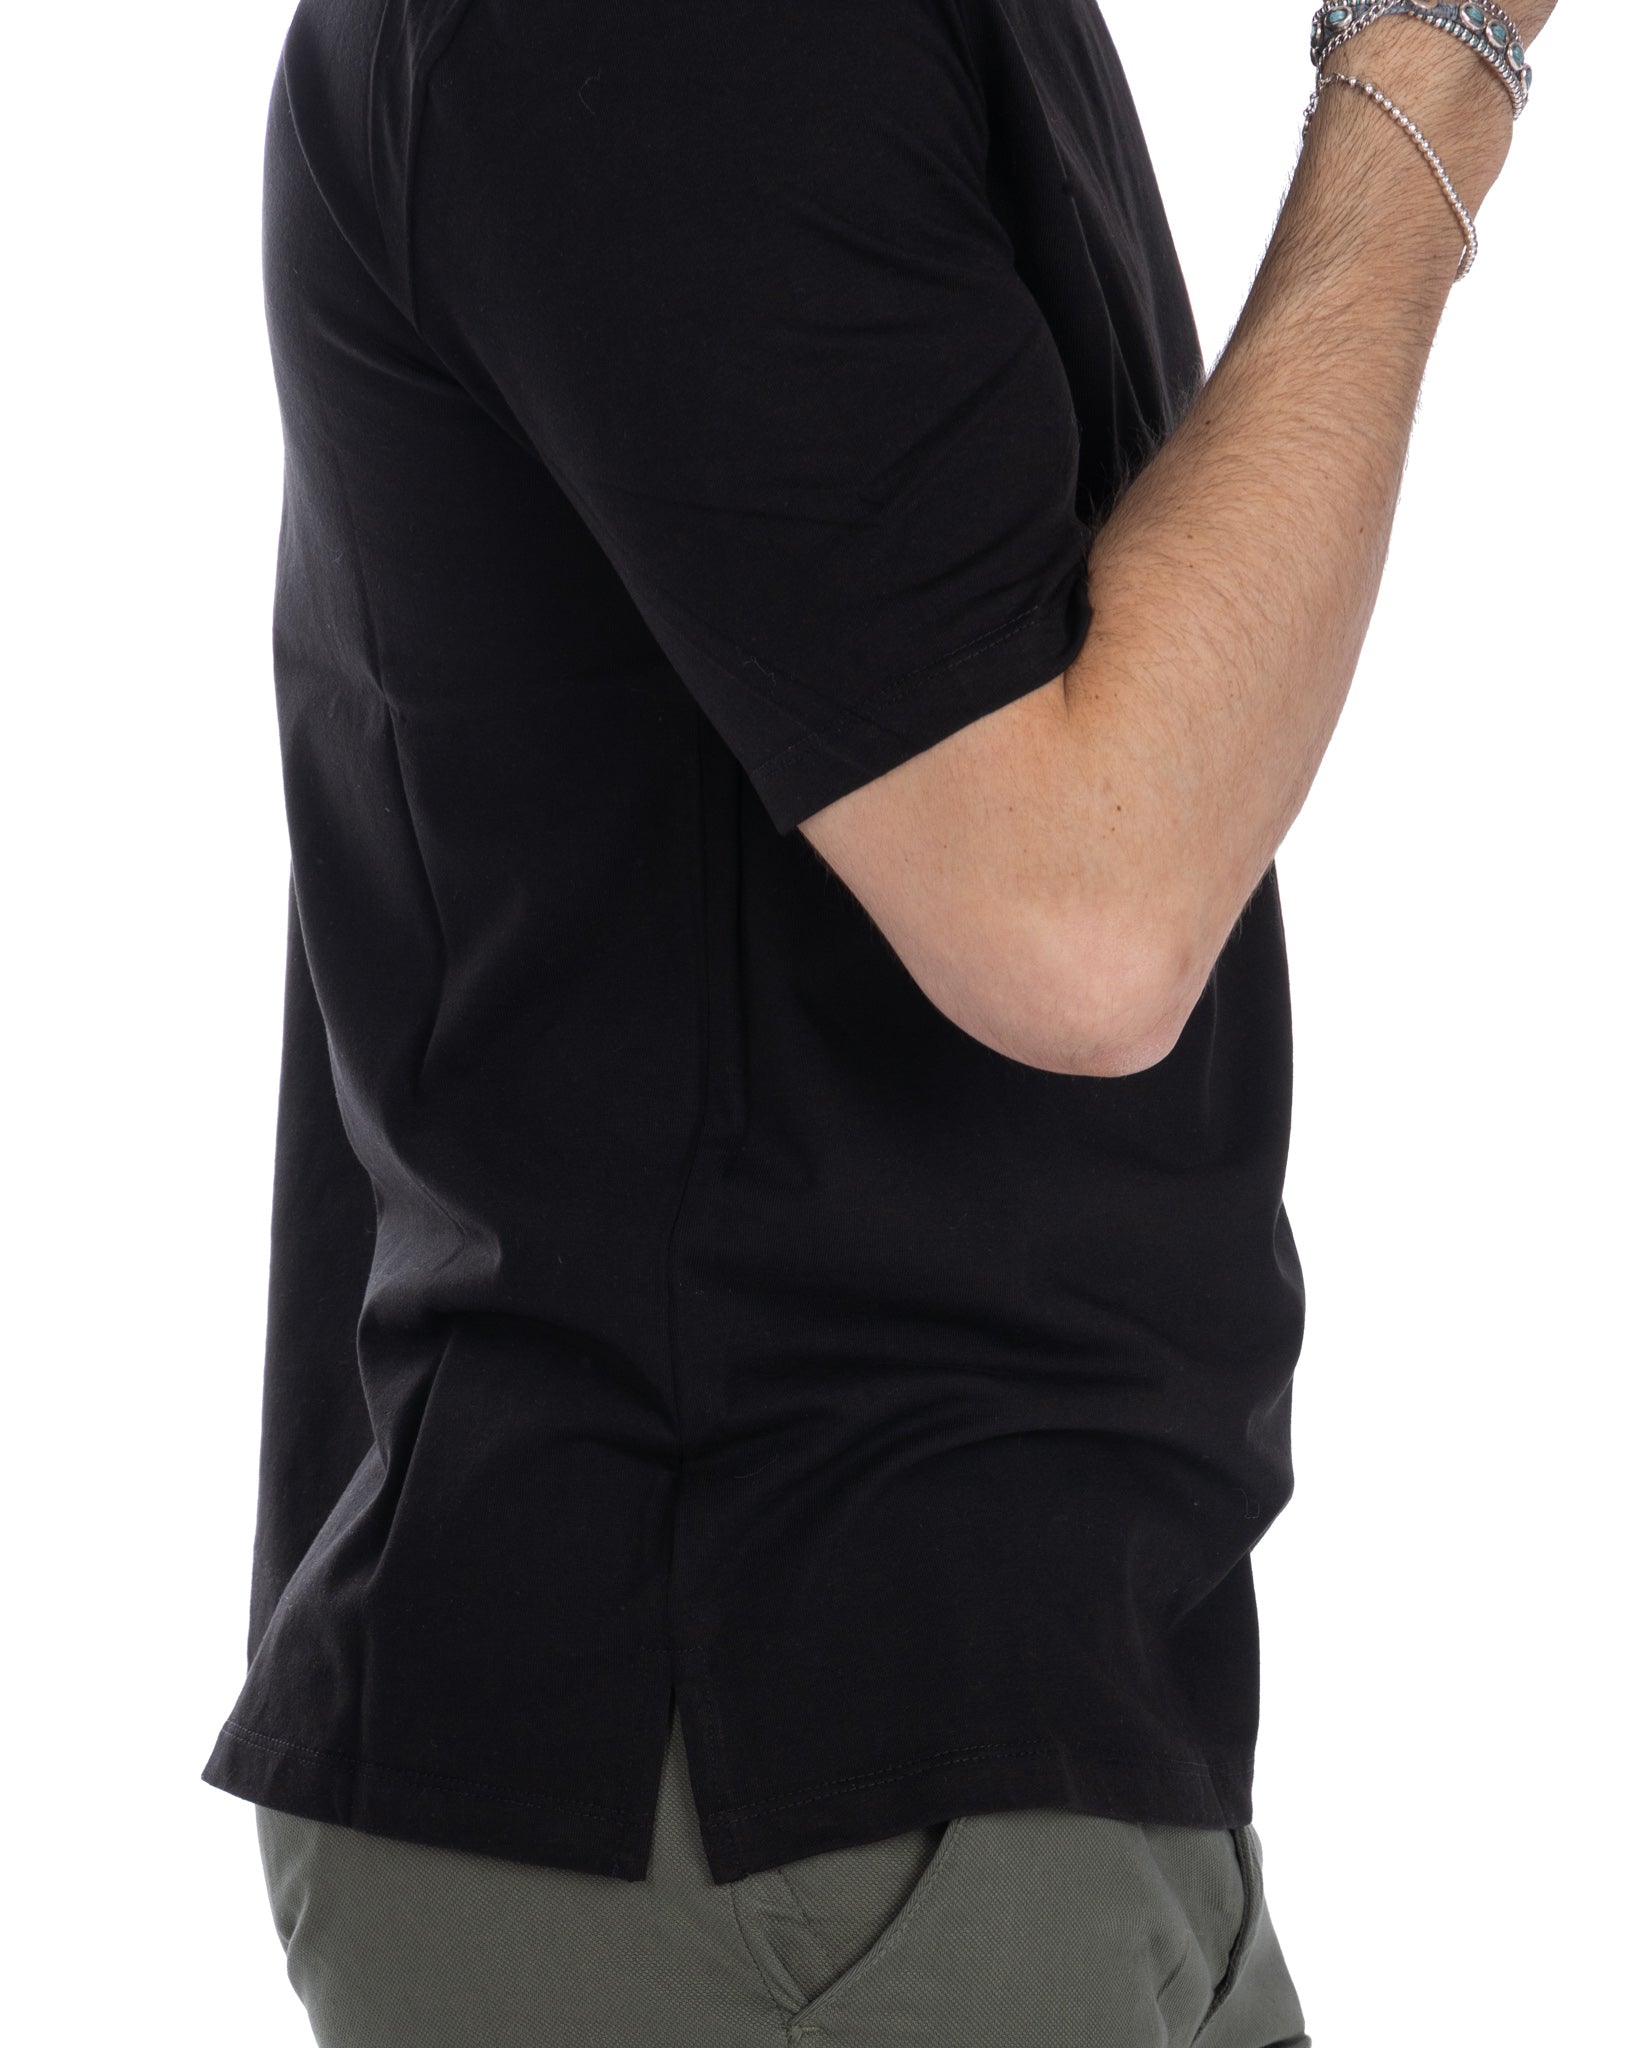 Tee - t-shirt basique en coton noir